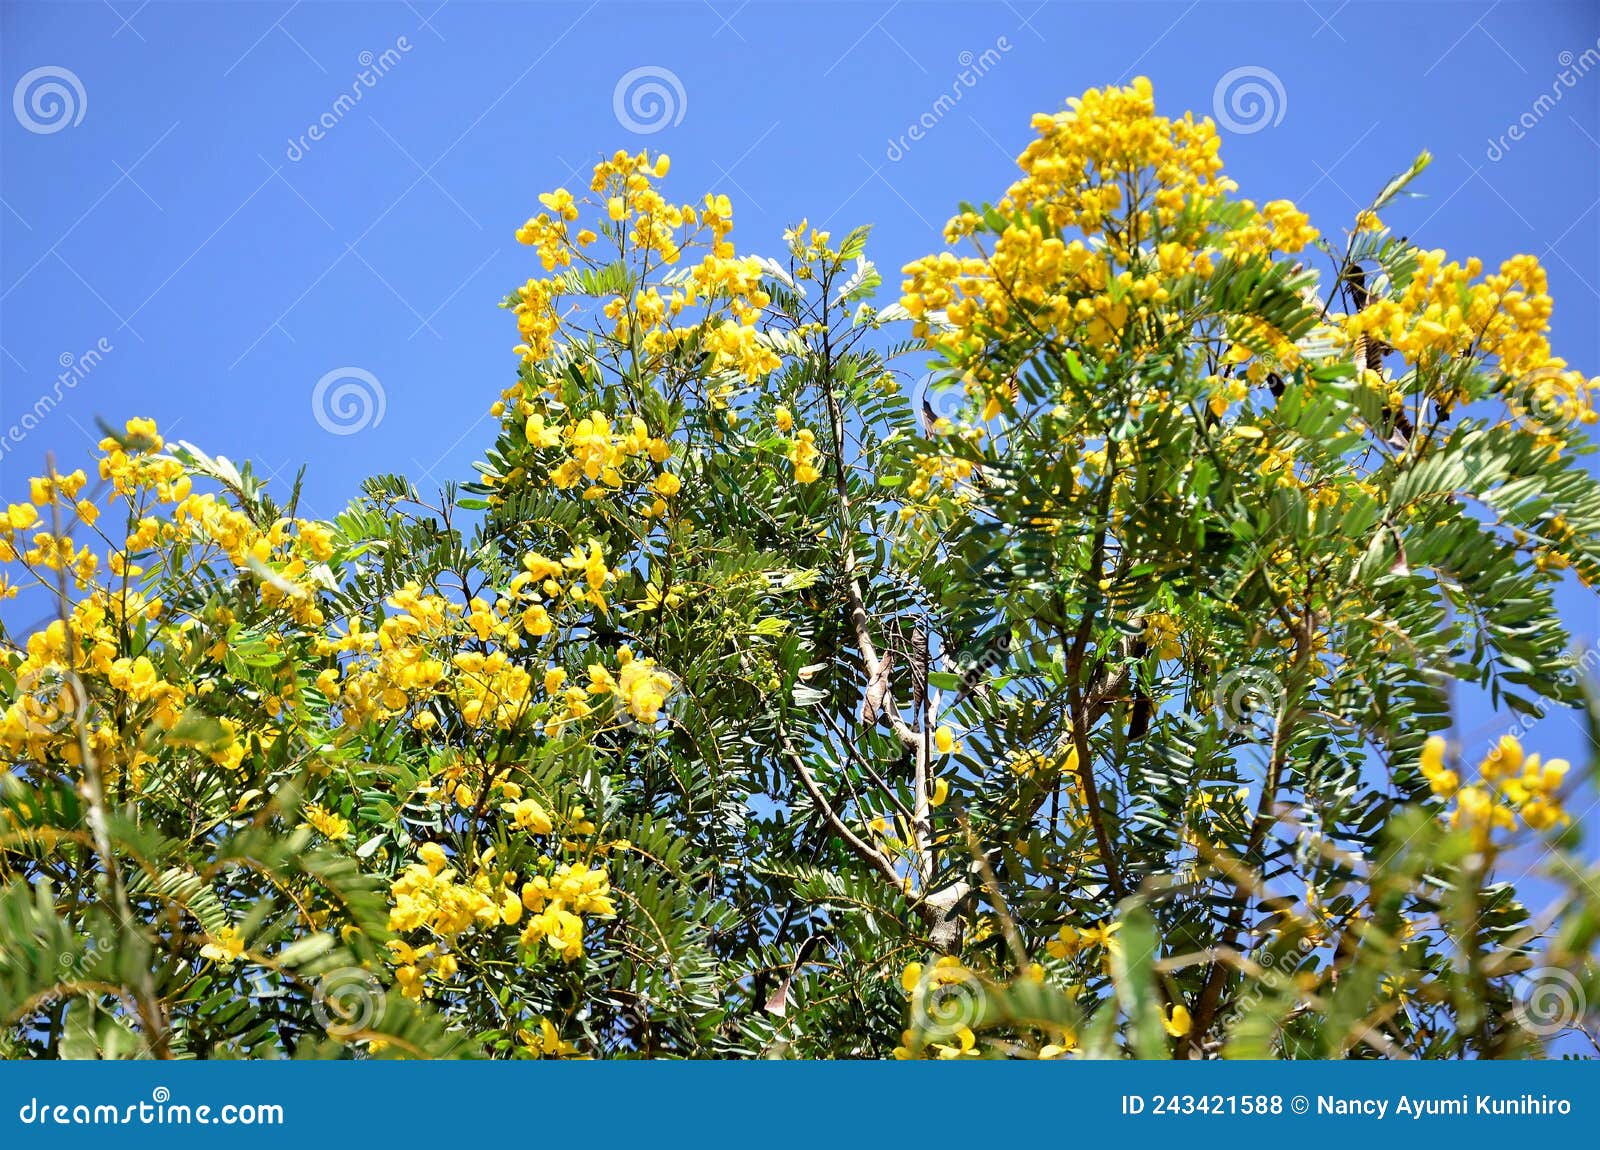 diversas flores amarelas da senna surattensis